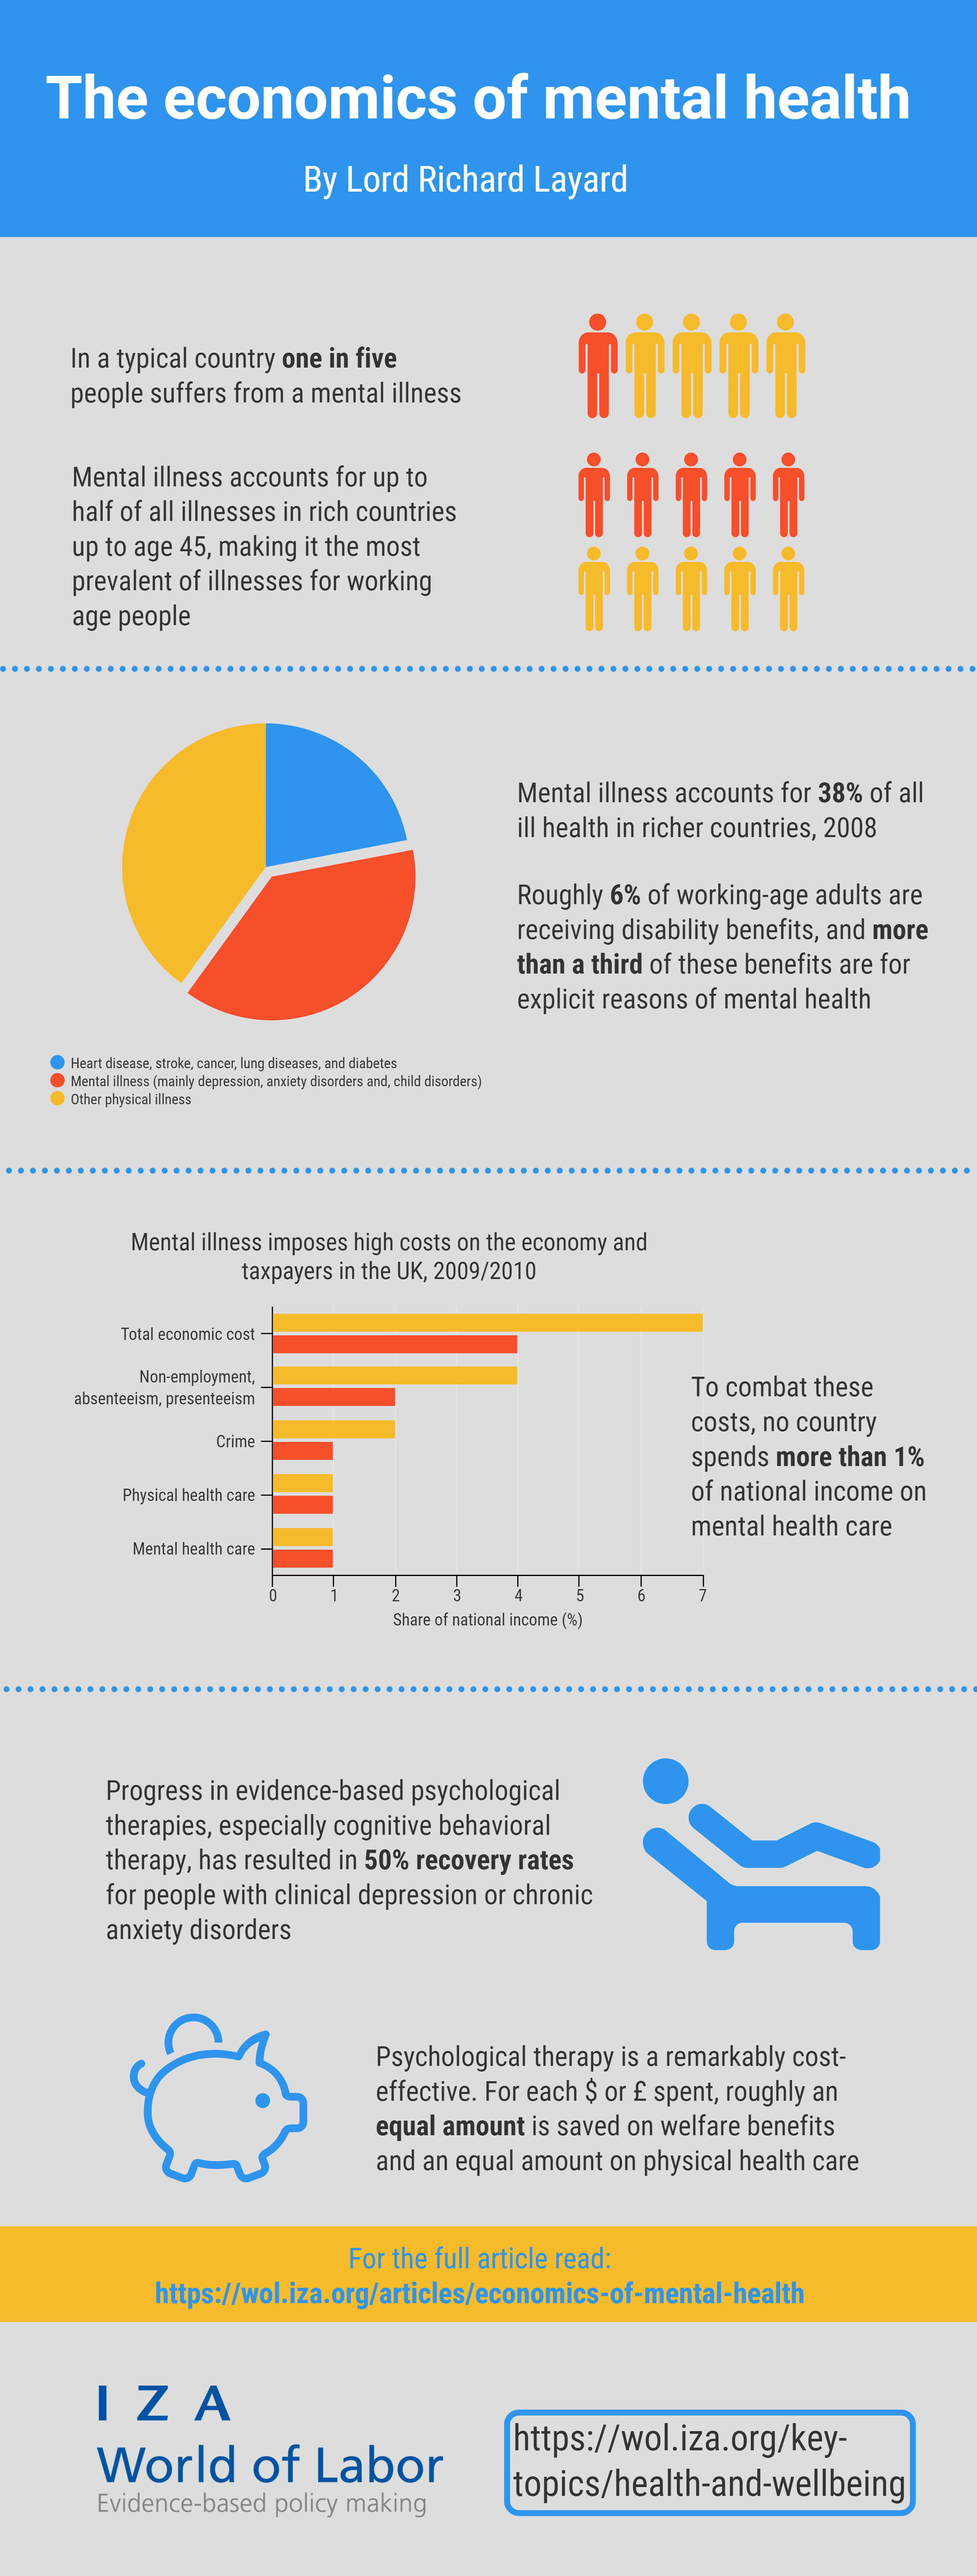 NEW REPORT: The economics of mental health